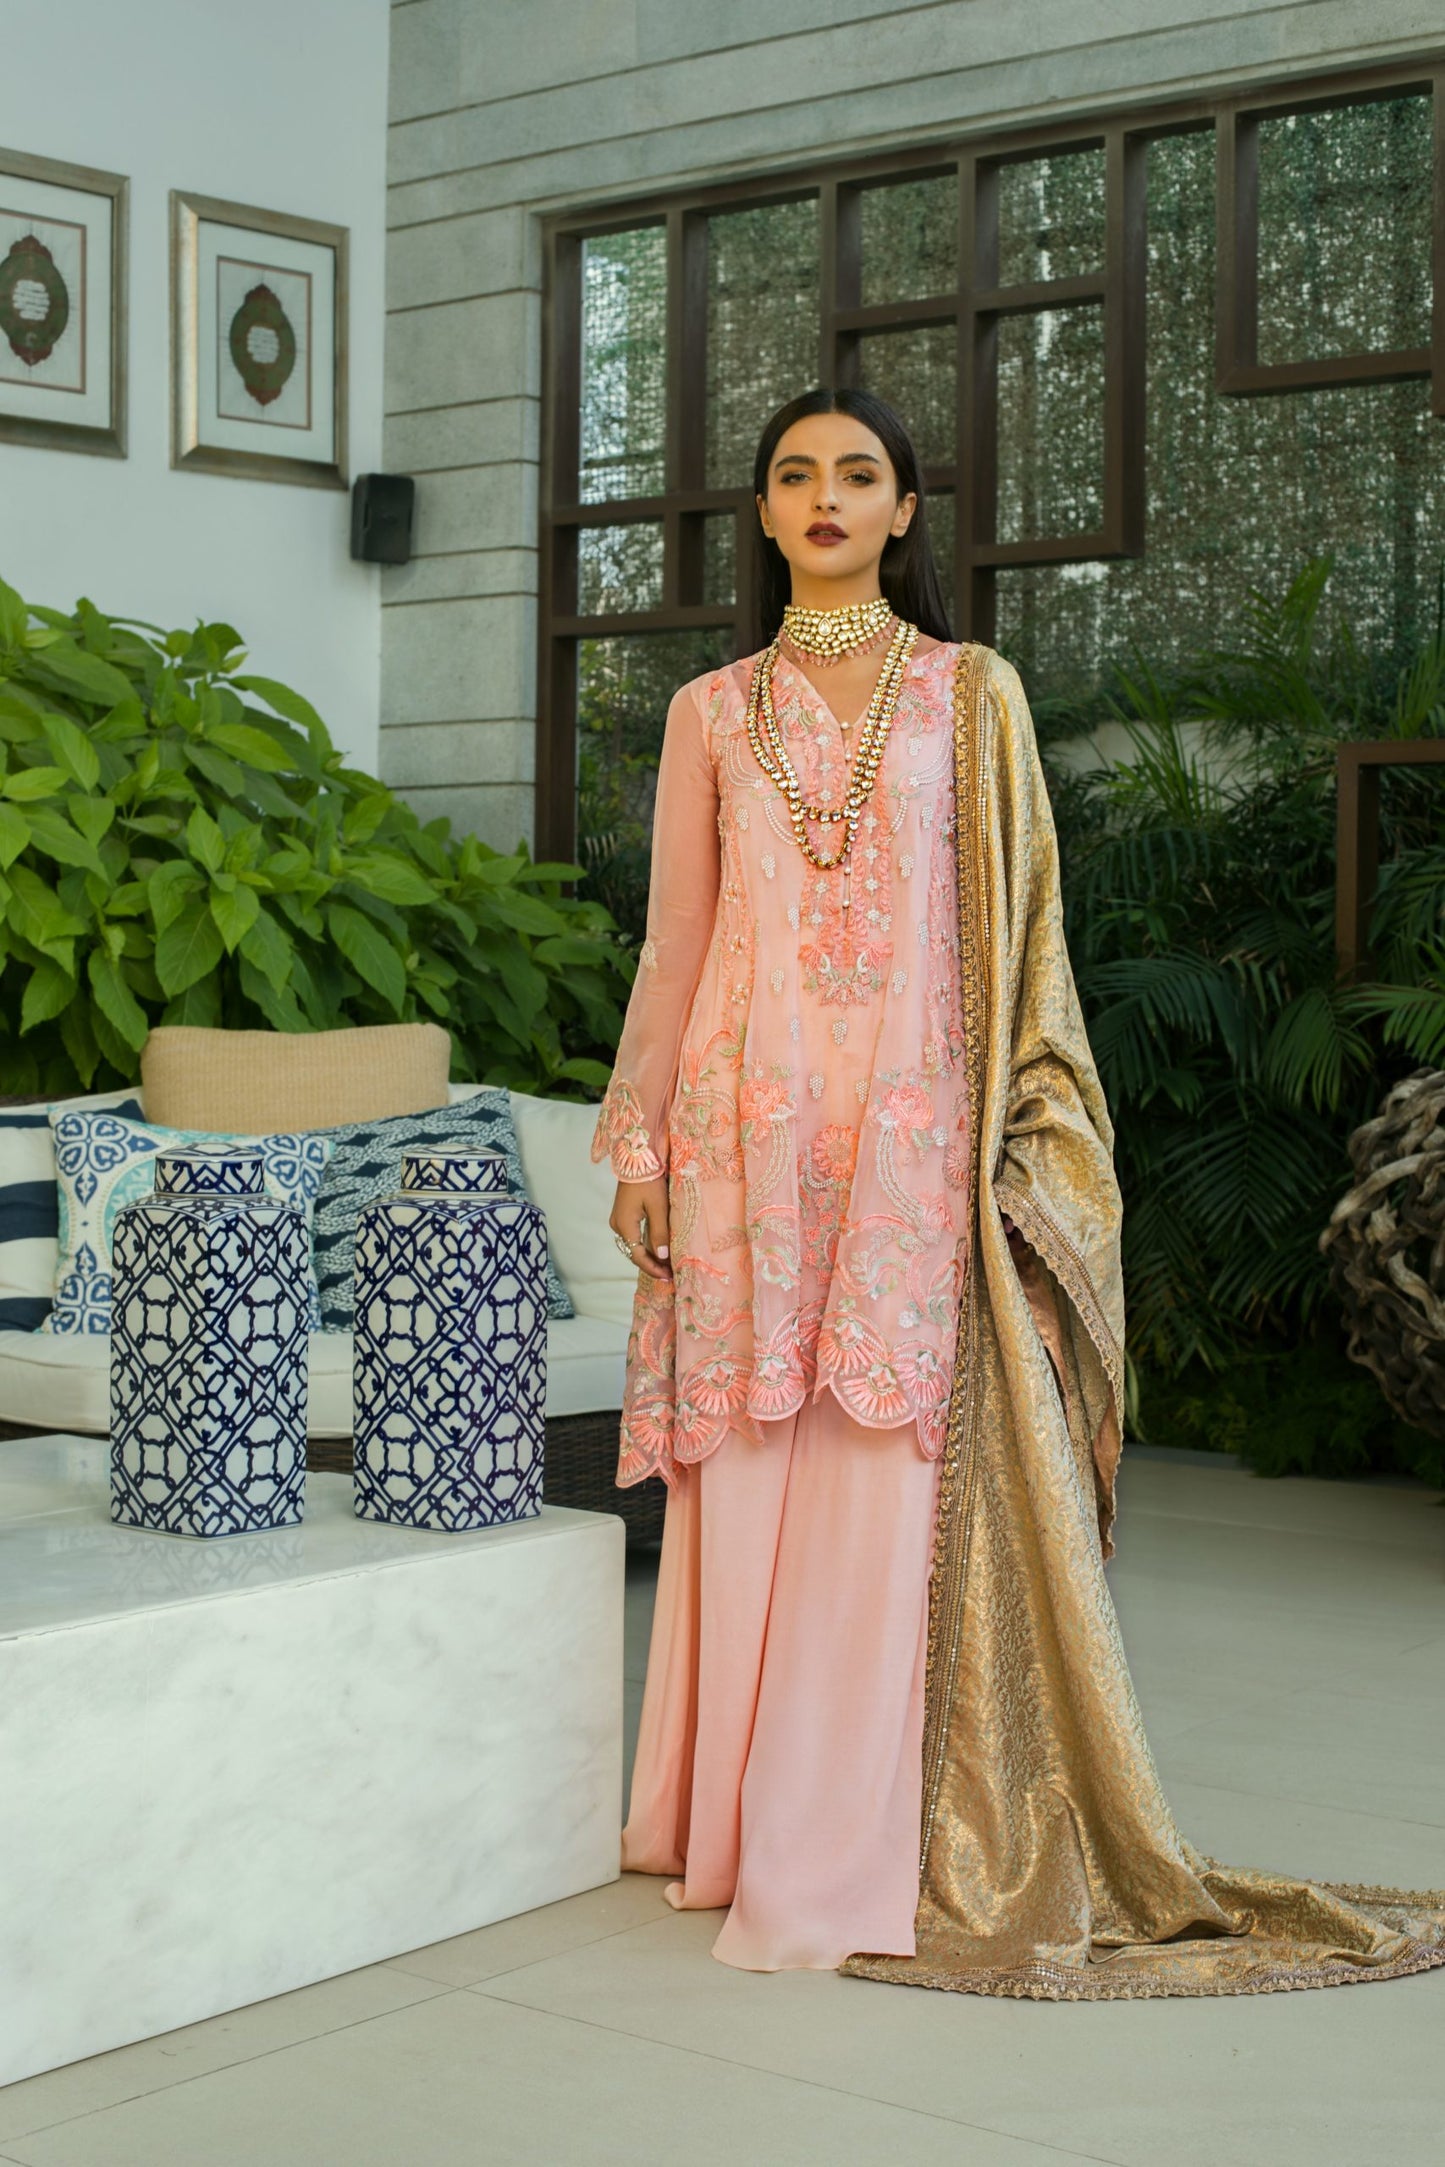 MHC-08 | Mina Hassan | Regalia Textile | Embroidered Chiffon Collection